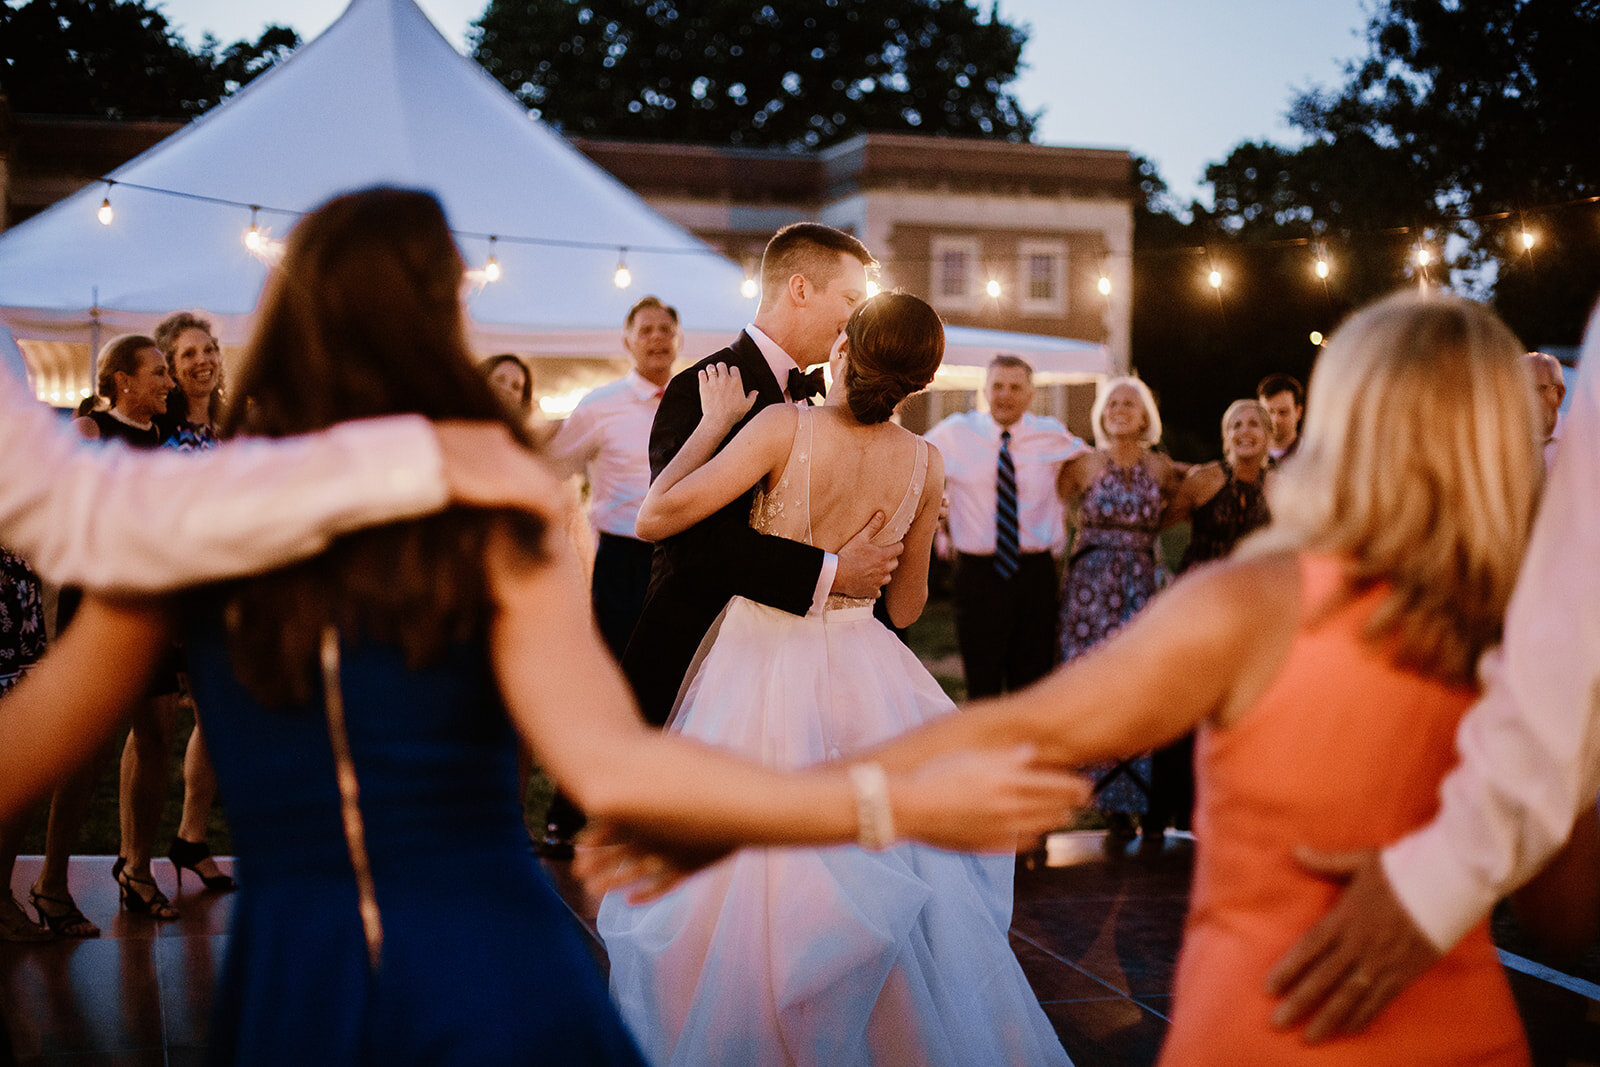  Bride and Groom Dancing | Sarah Mattozzi Photography | Ball Gown Wedding dress and Black Tux | Outdoor Classic Wedding at Third Church and Veritas School | Richmond Wedding Photographer 